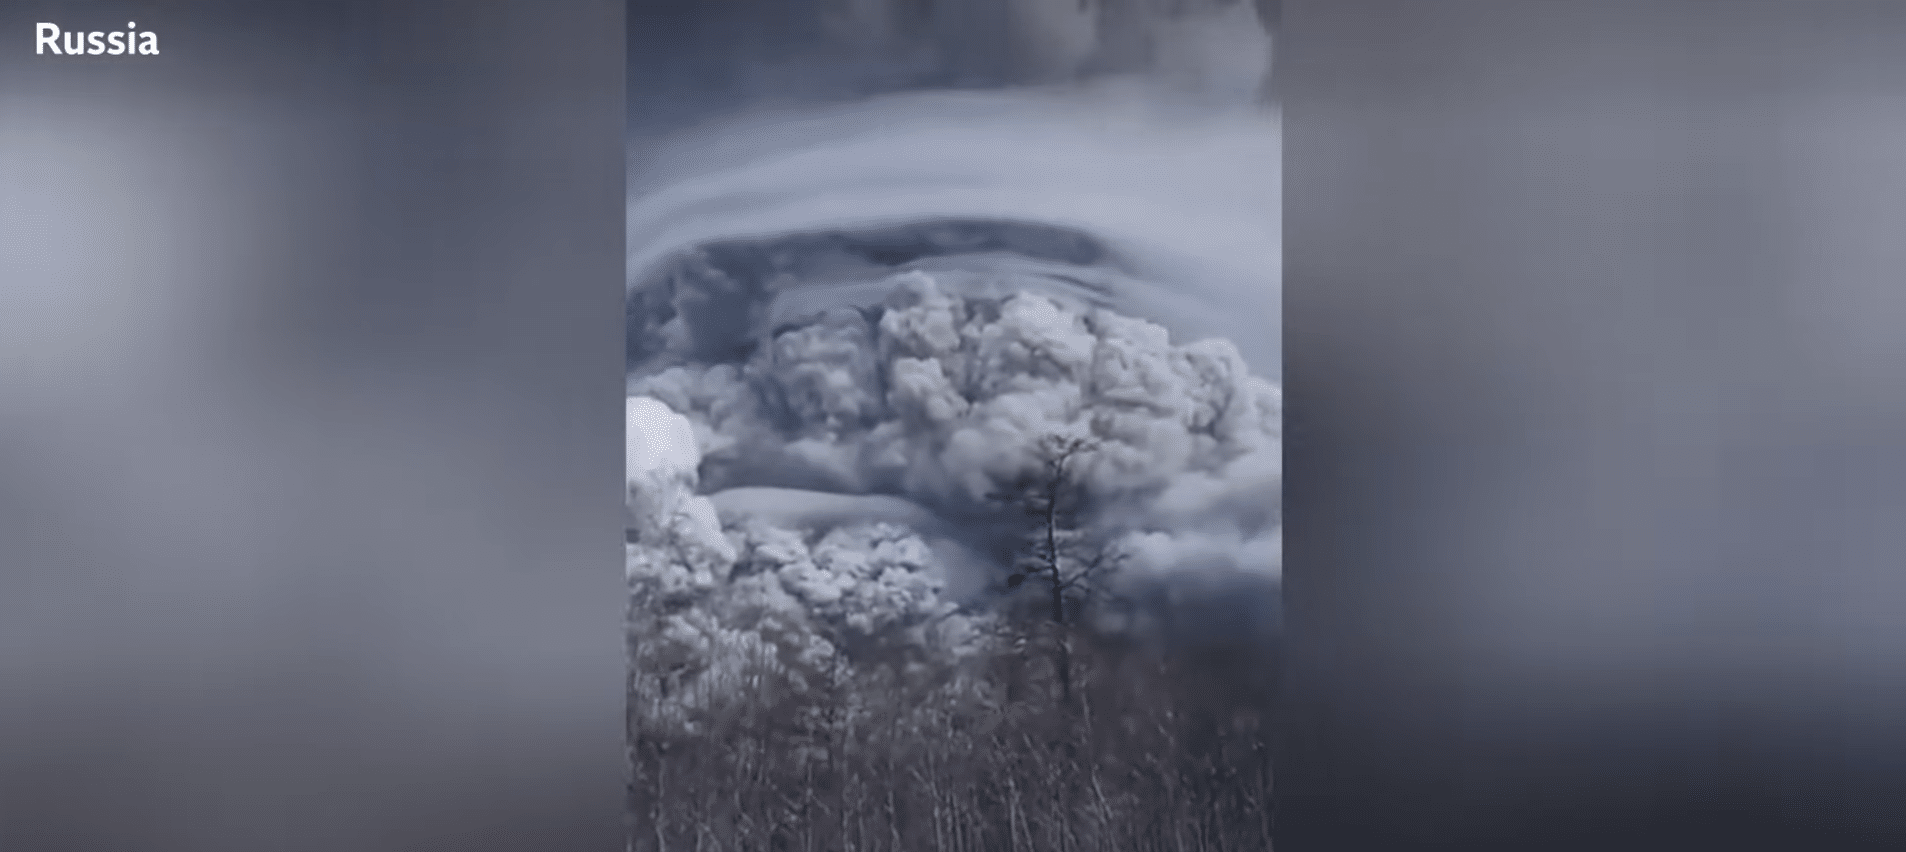 (WATCH) Massive volcanic eruption in Russia sends ash cloud 12 miles into sky in apocalyptic scenes